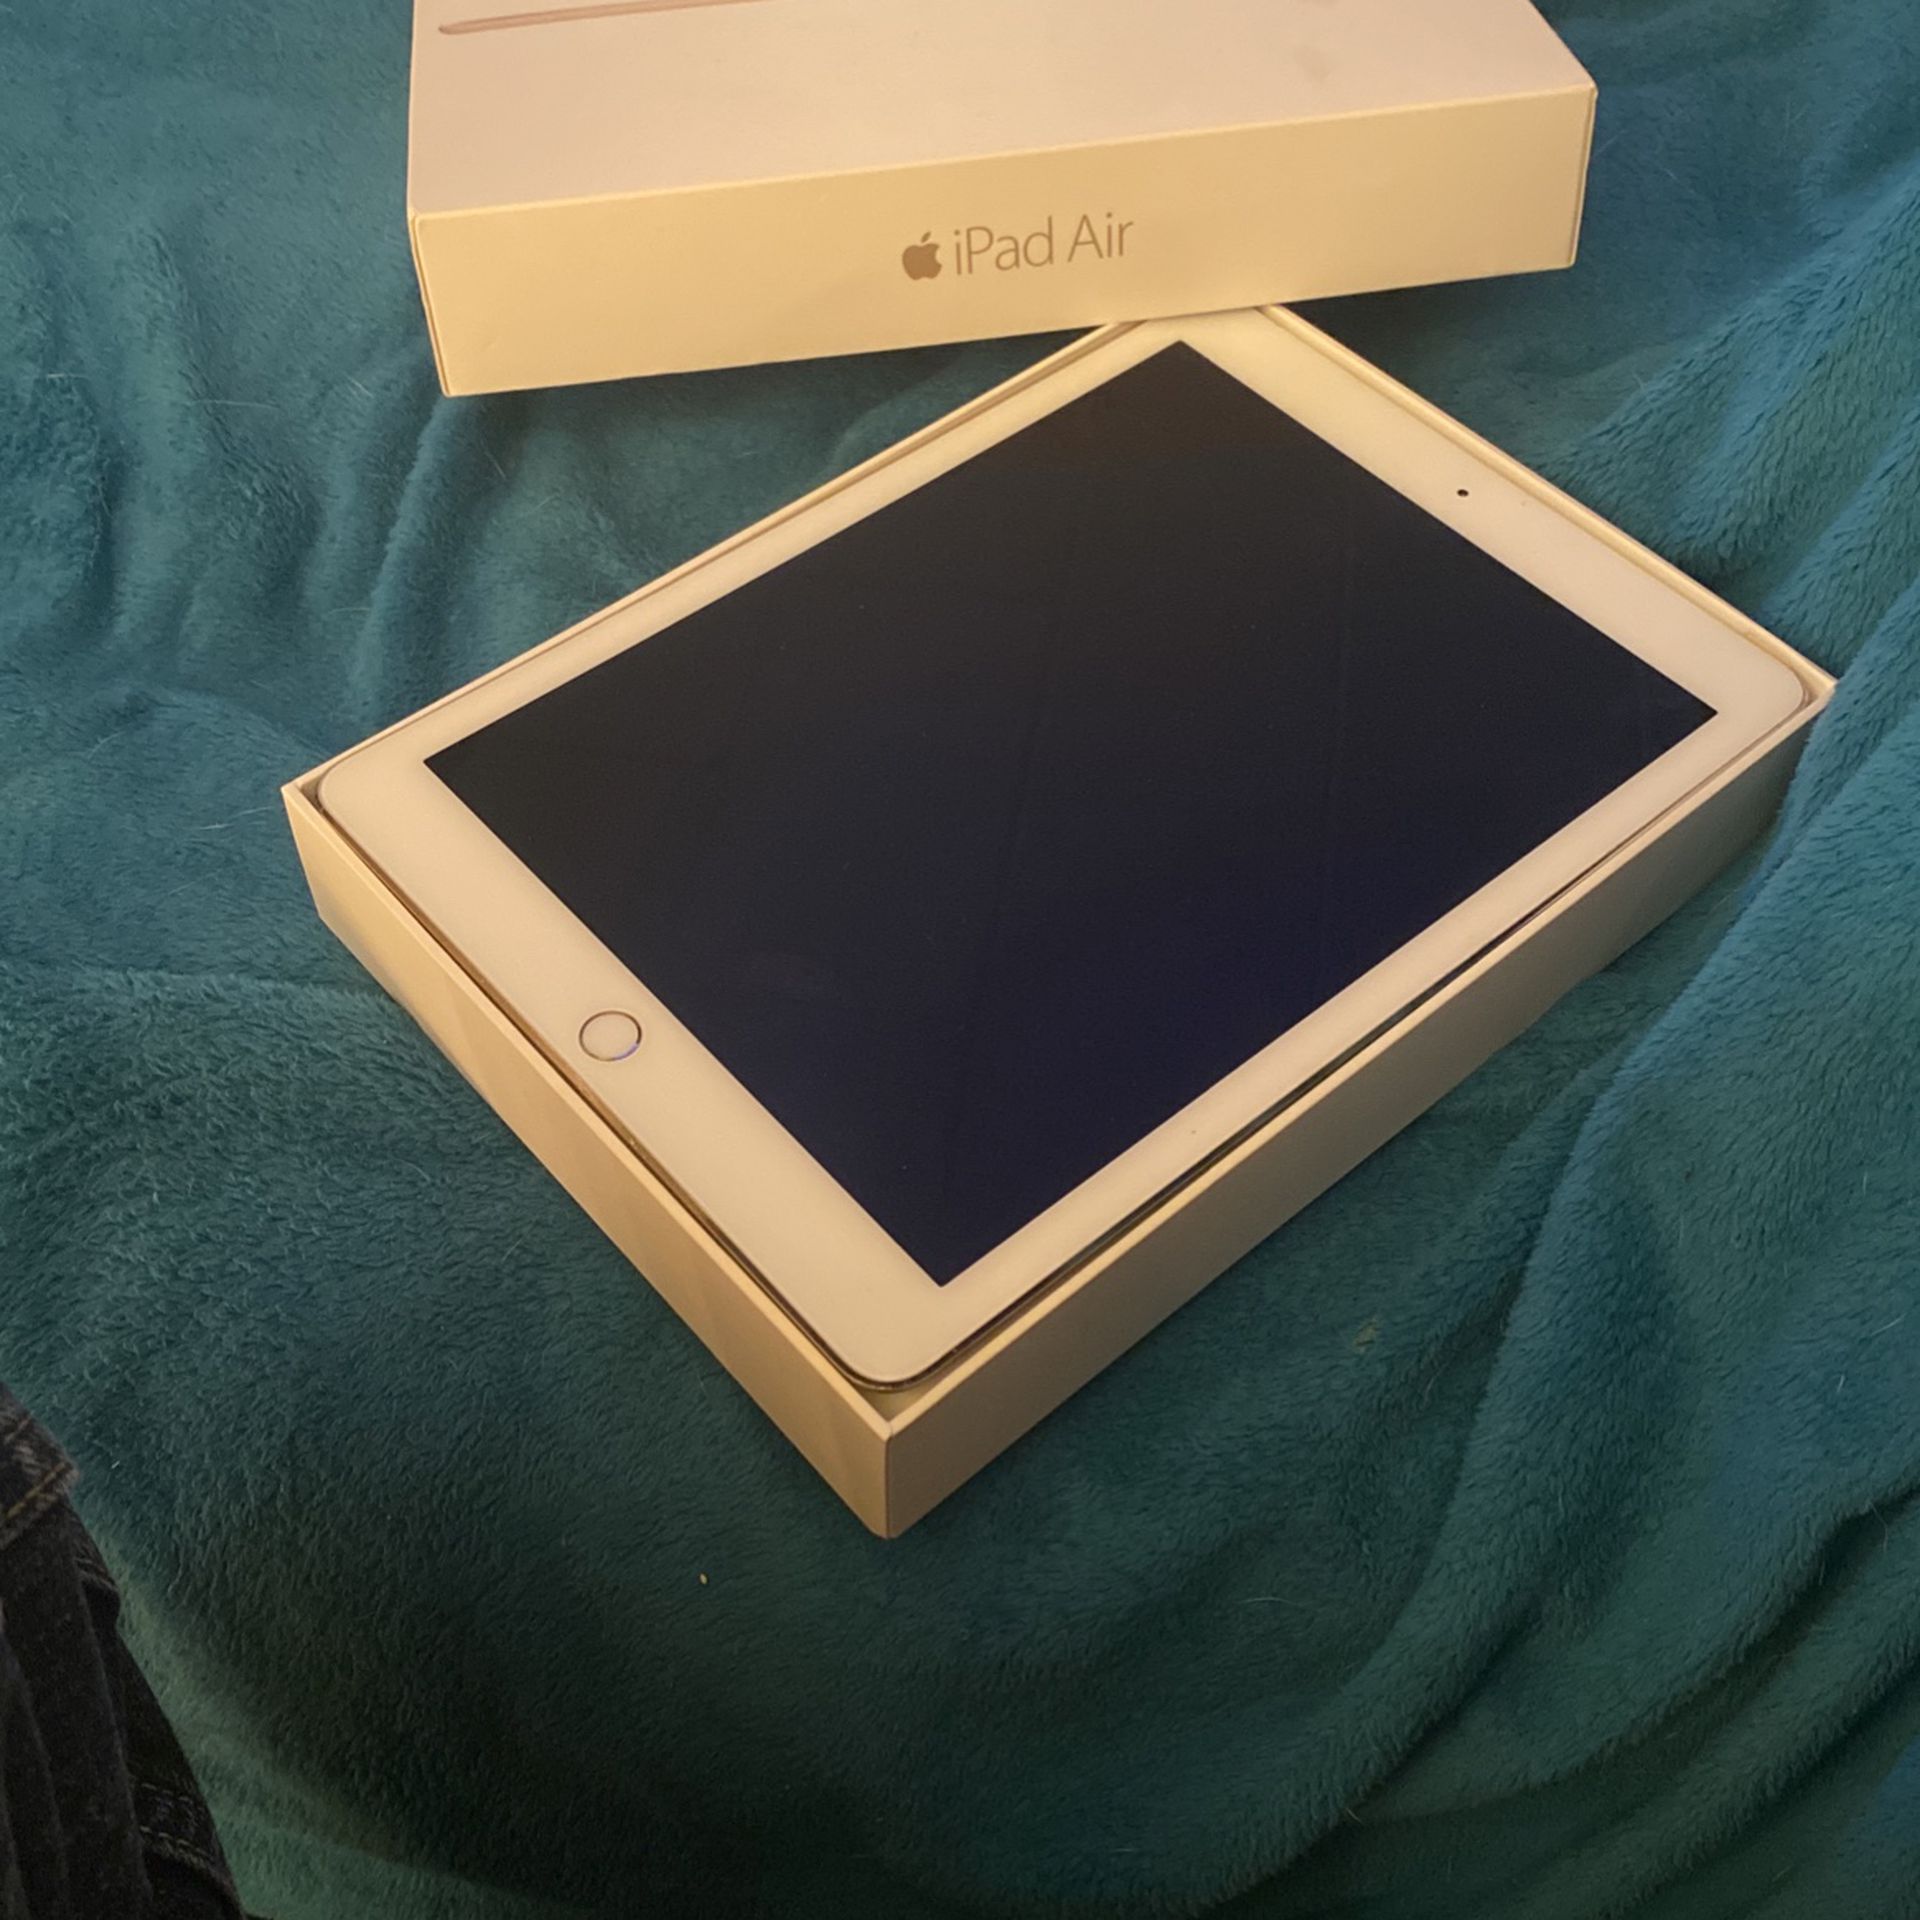 iPad Air 2 Gold 16GB